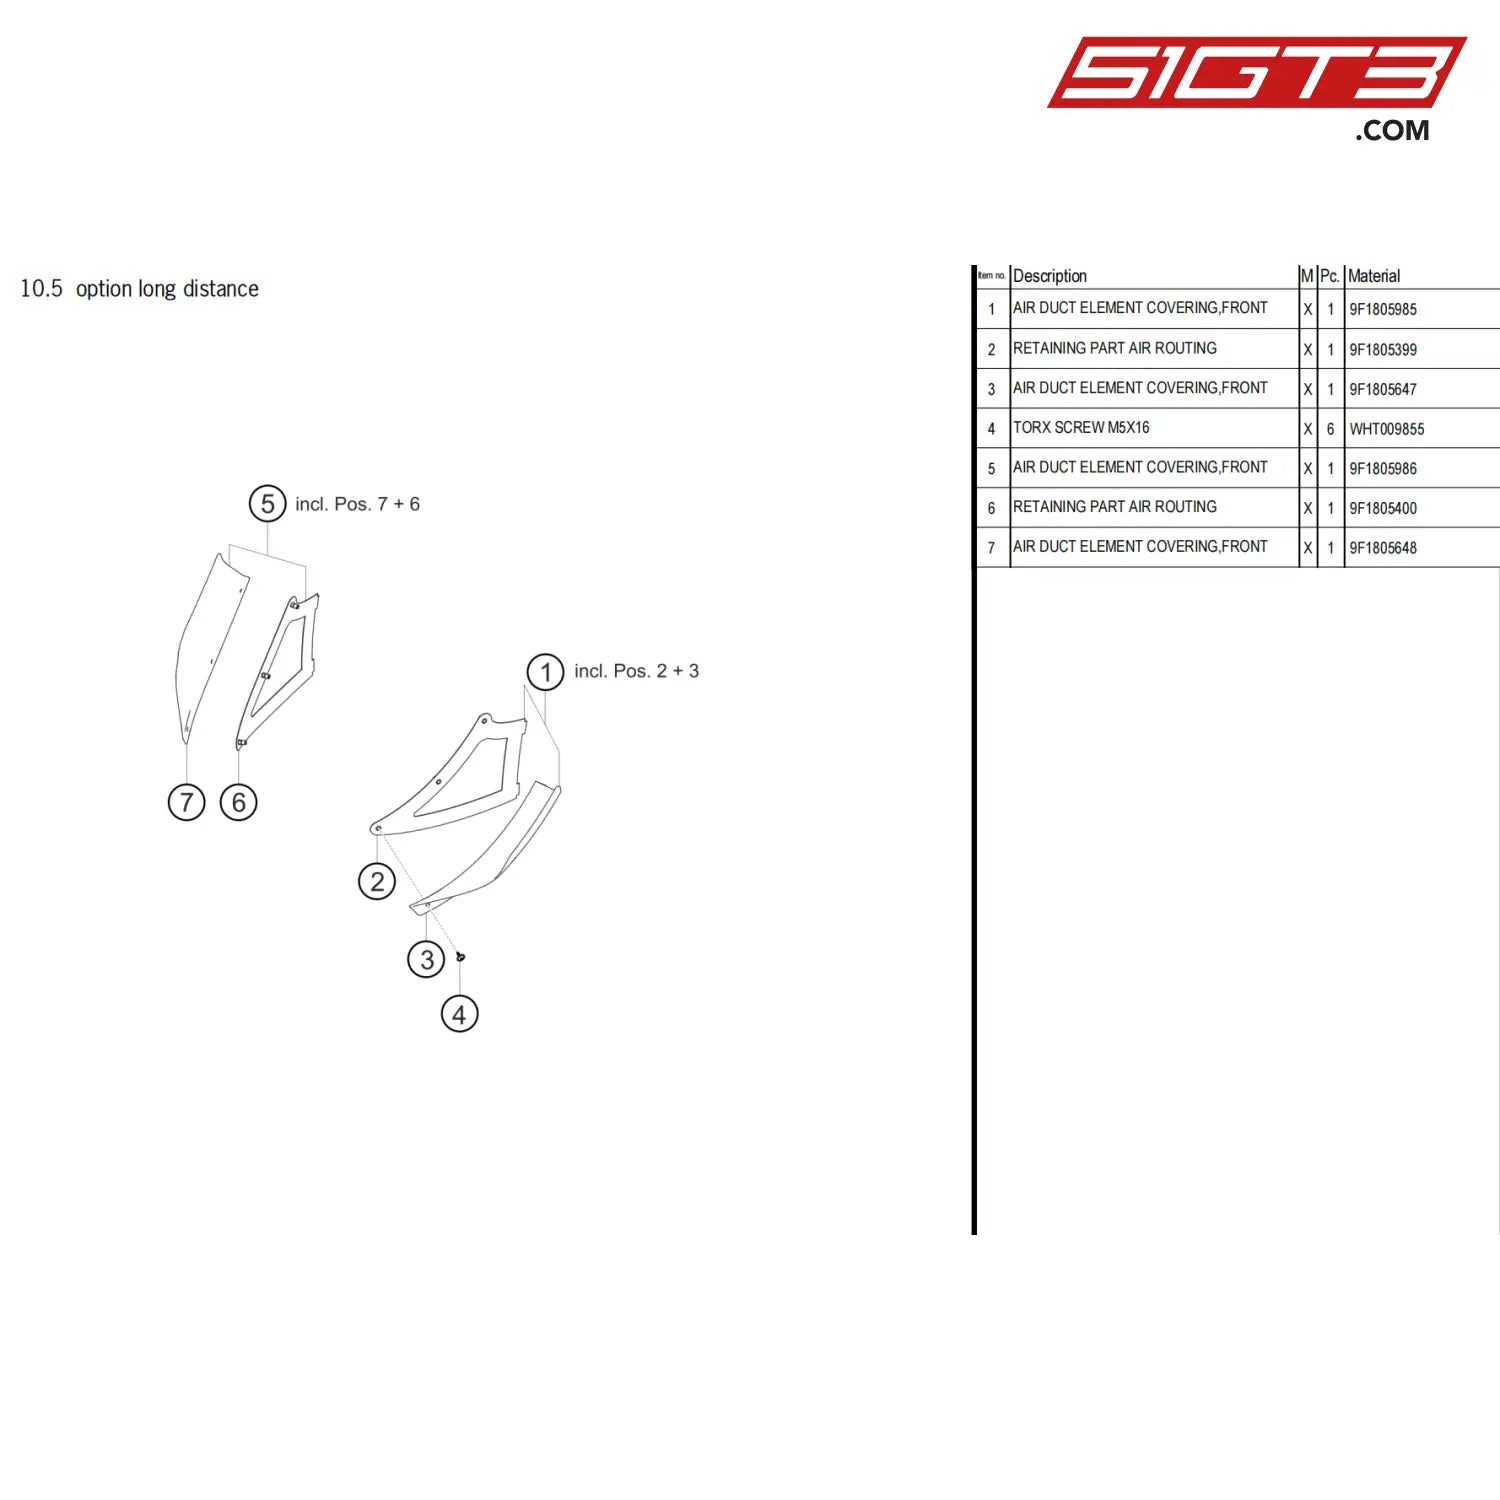 Retaining Part Air Routing - 9F1805400 [Porsche 911 Gt3 Cup Type 992 (Gen 1)] Option Long Distance